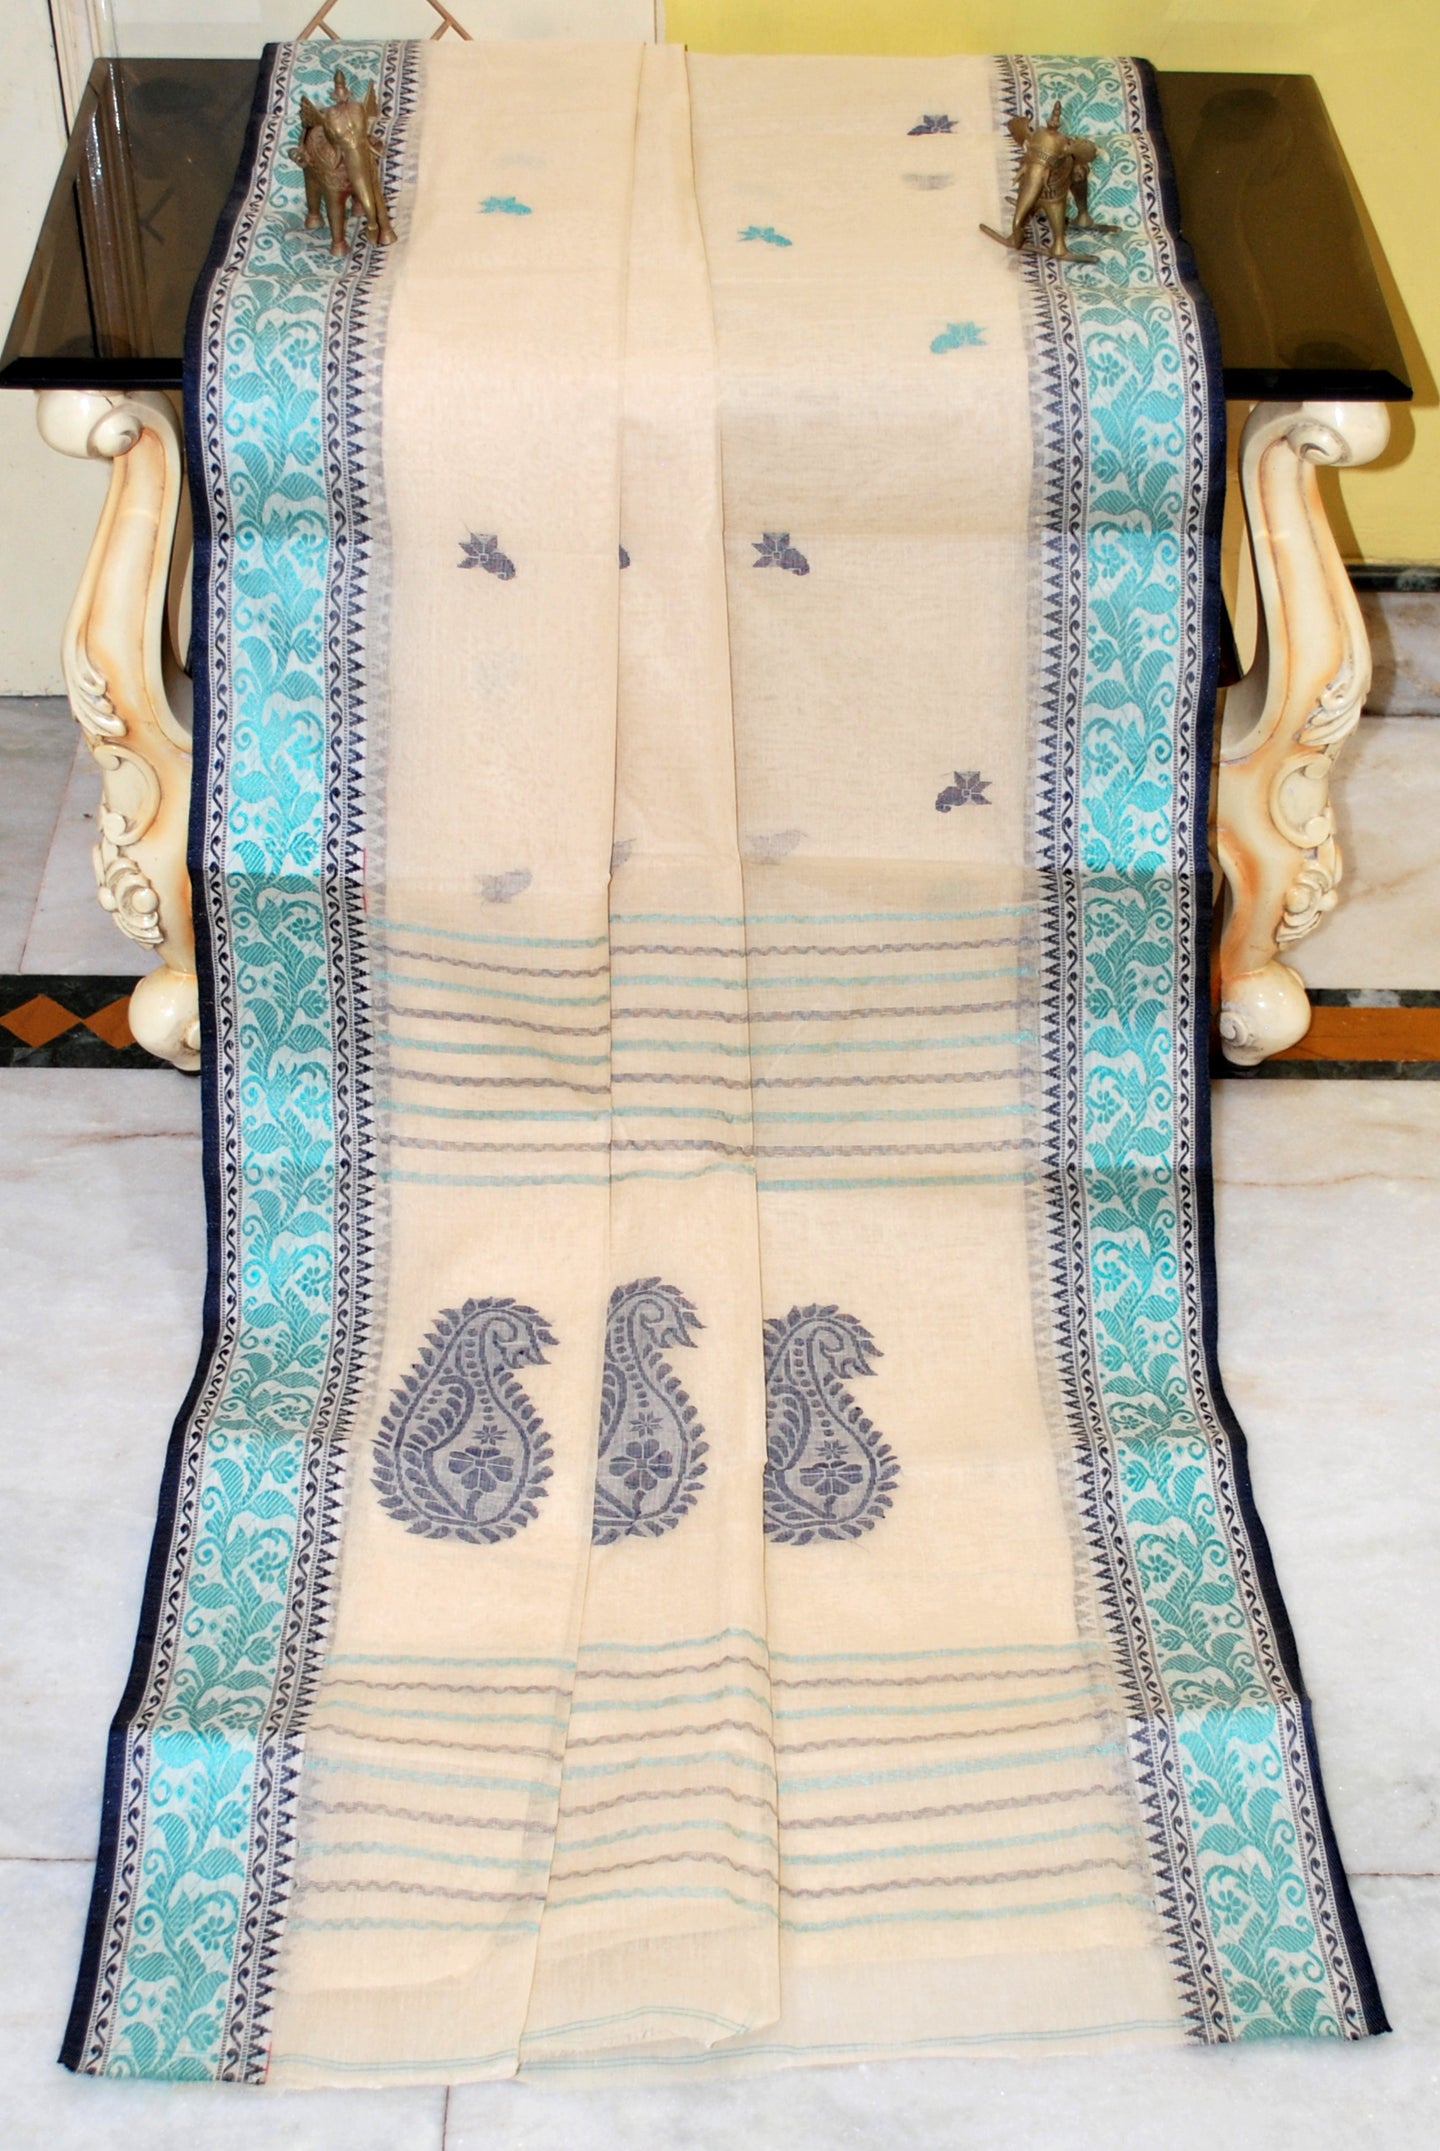 Medium Size Thread Nakshi Border Premium Quality Bengal Handloom Cotton Saree in Beige, Sea Green and Black